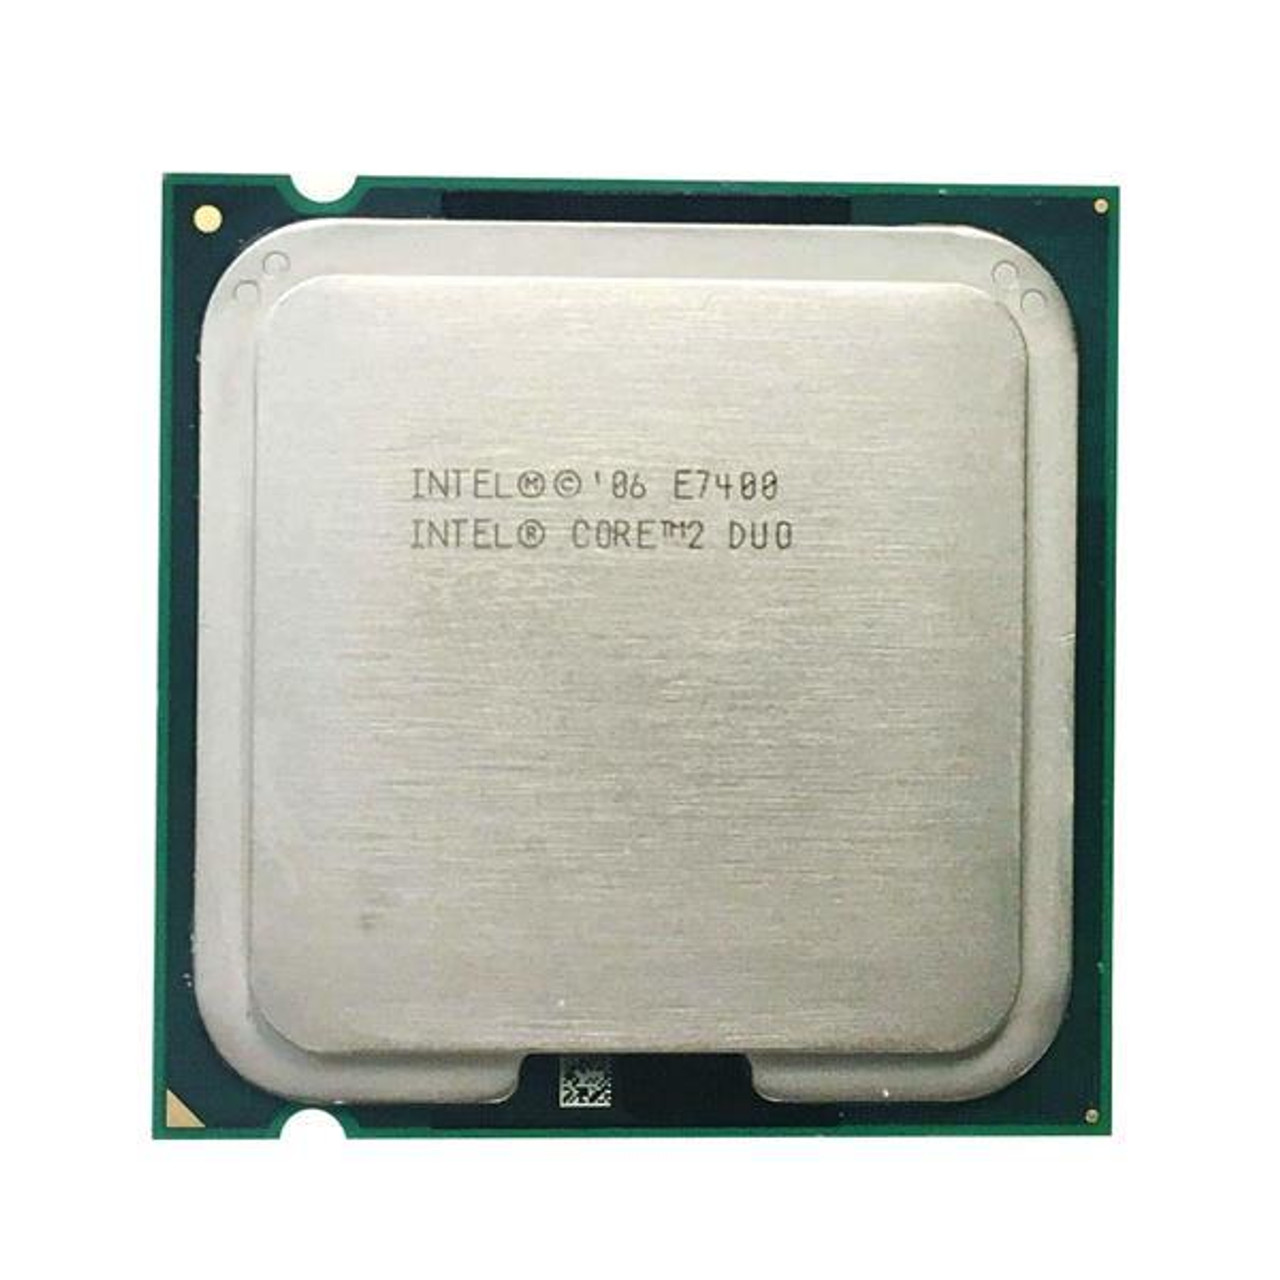 Fujitsu 2.80GHz 1066MHz FSB 3MB L2 Cache Socket LGA775 Intel Core 2 Duo Dual-Core E7400 Desktop Processor Upgrade